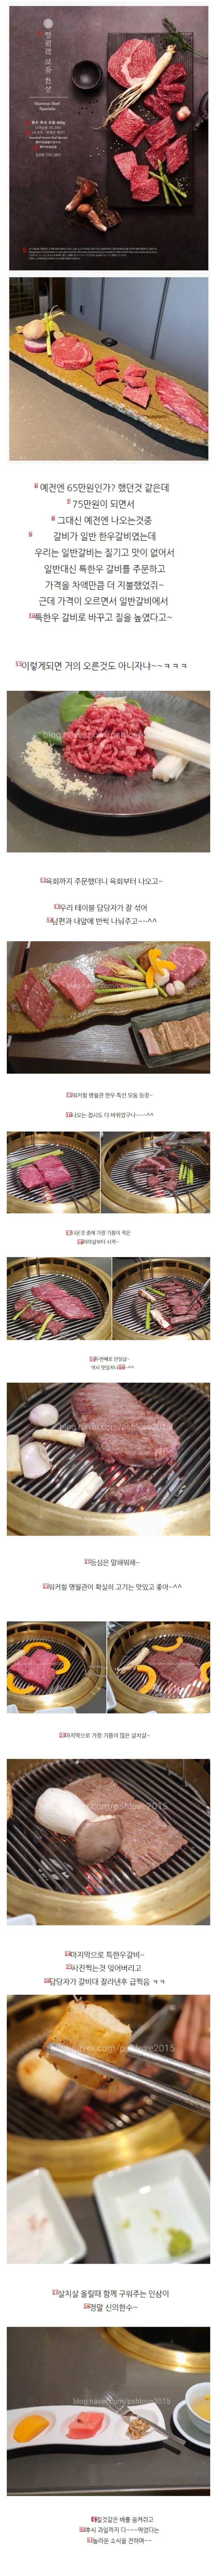 750,000 won Korean beef table djpg